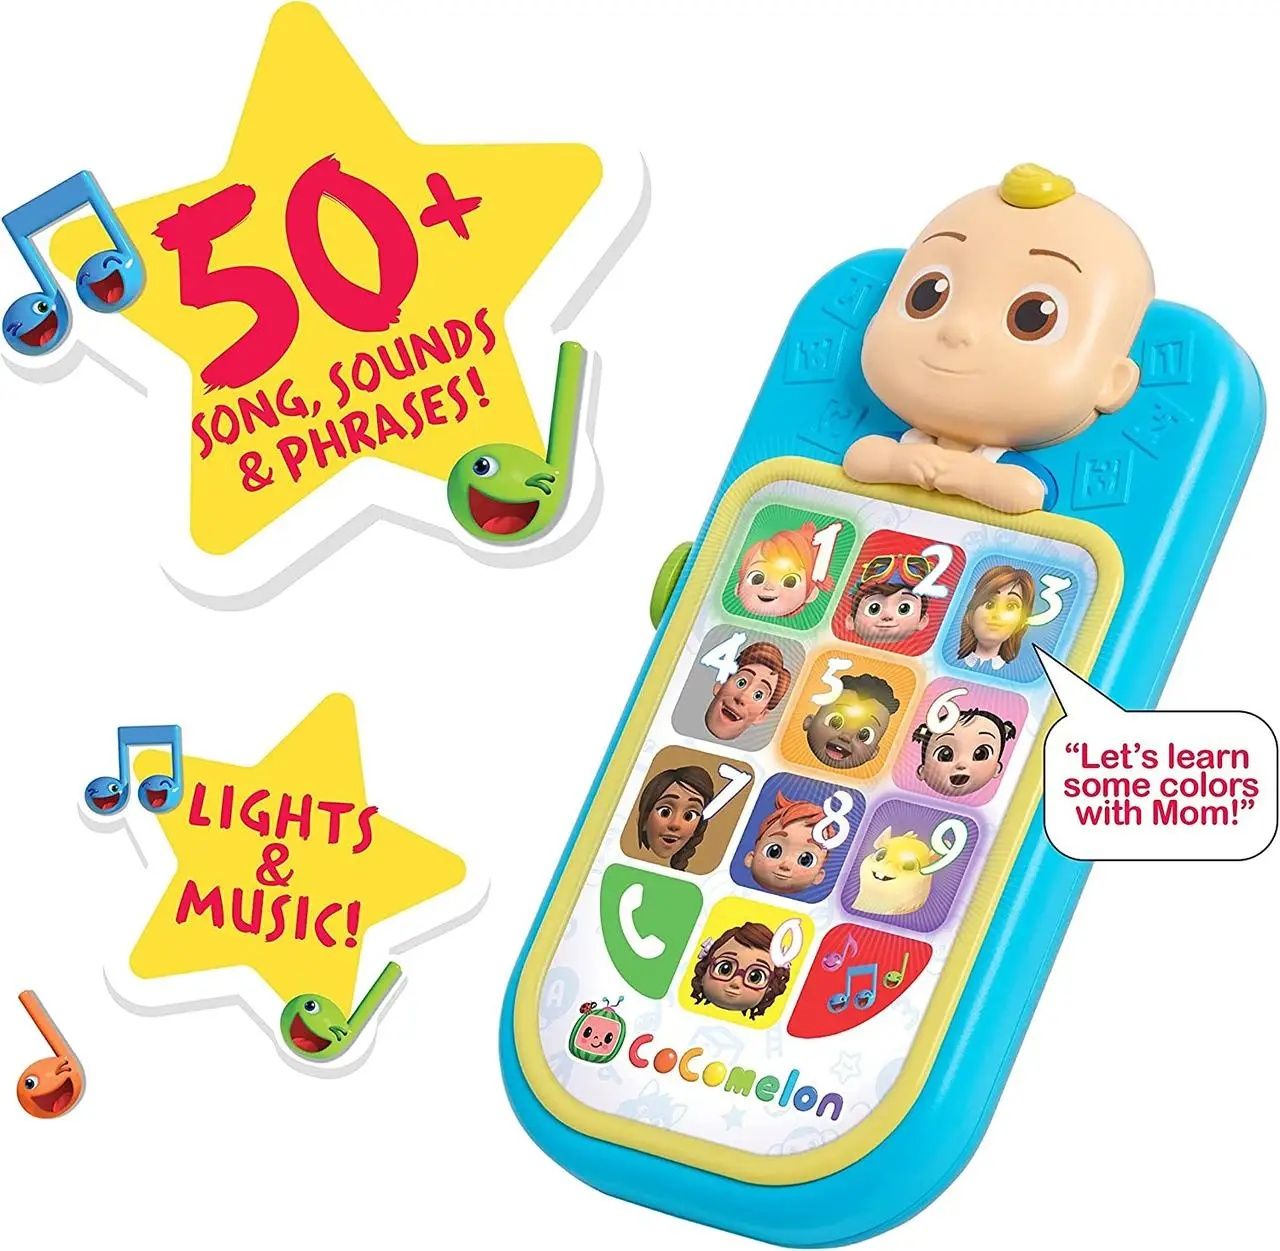 Іграшка інтерактивна телефон CoComelon JJ світло, звук, музика, игрушк